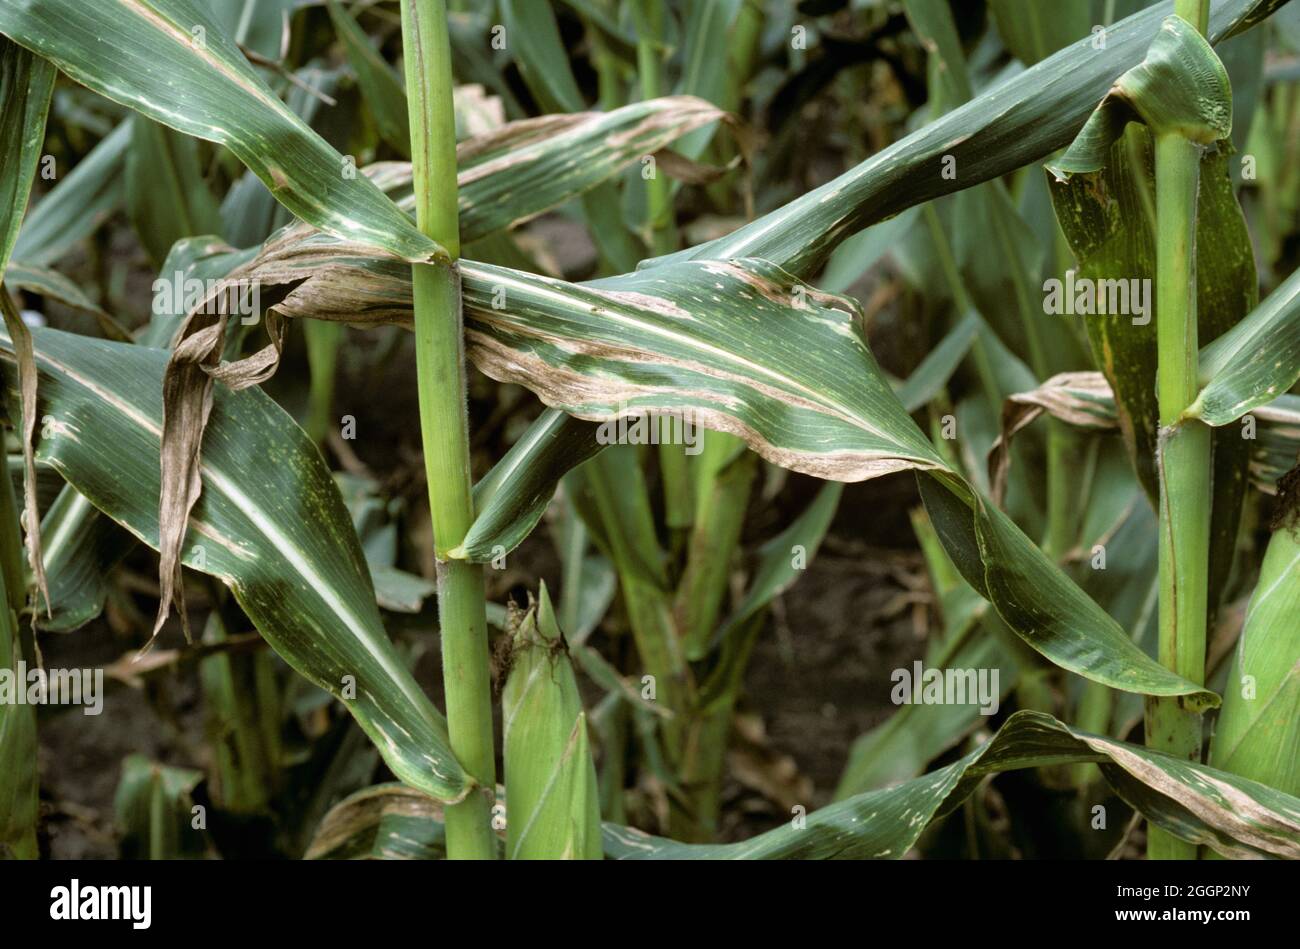 Stewart's wilt (Pantoea stewartii) necrotic longitudinal lesions on the leaves ao mature maize or corn crop, USA Stock Photo